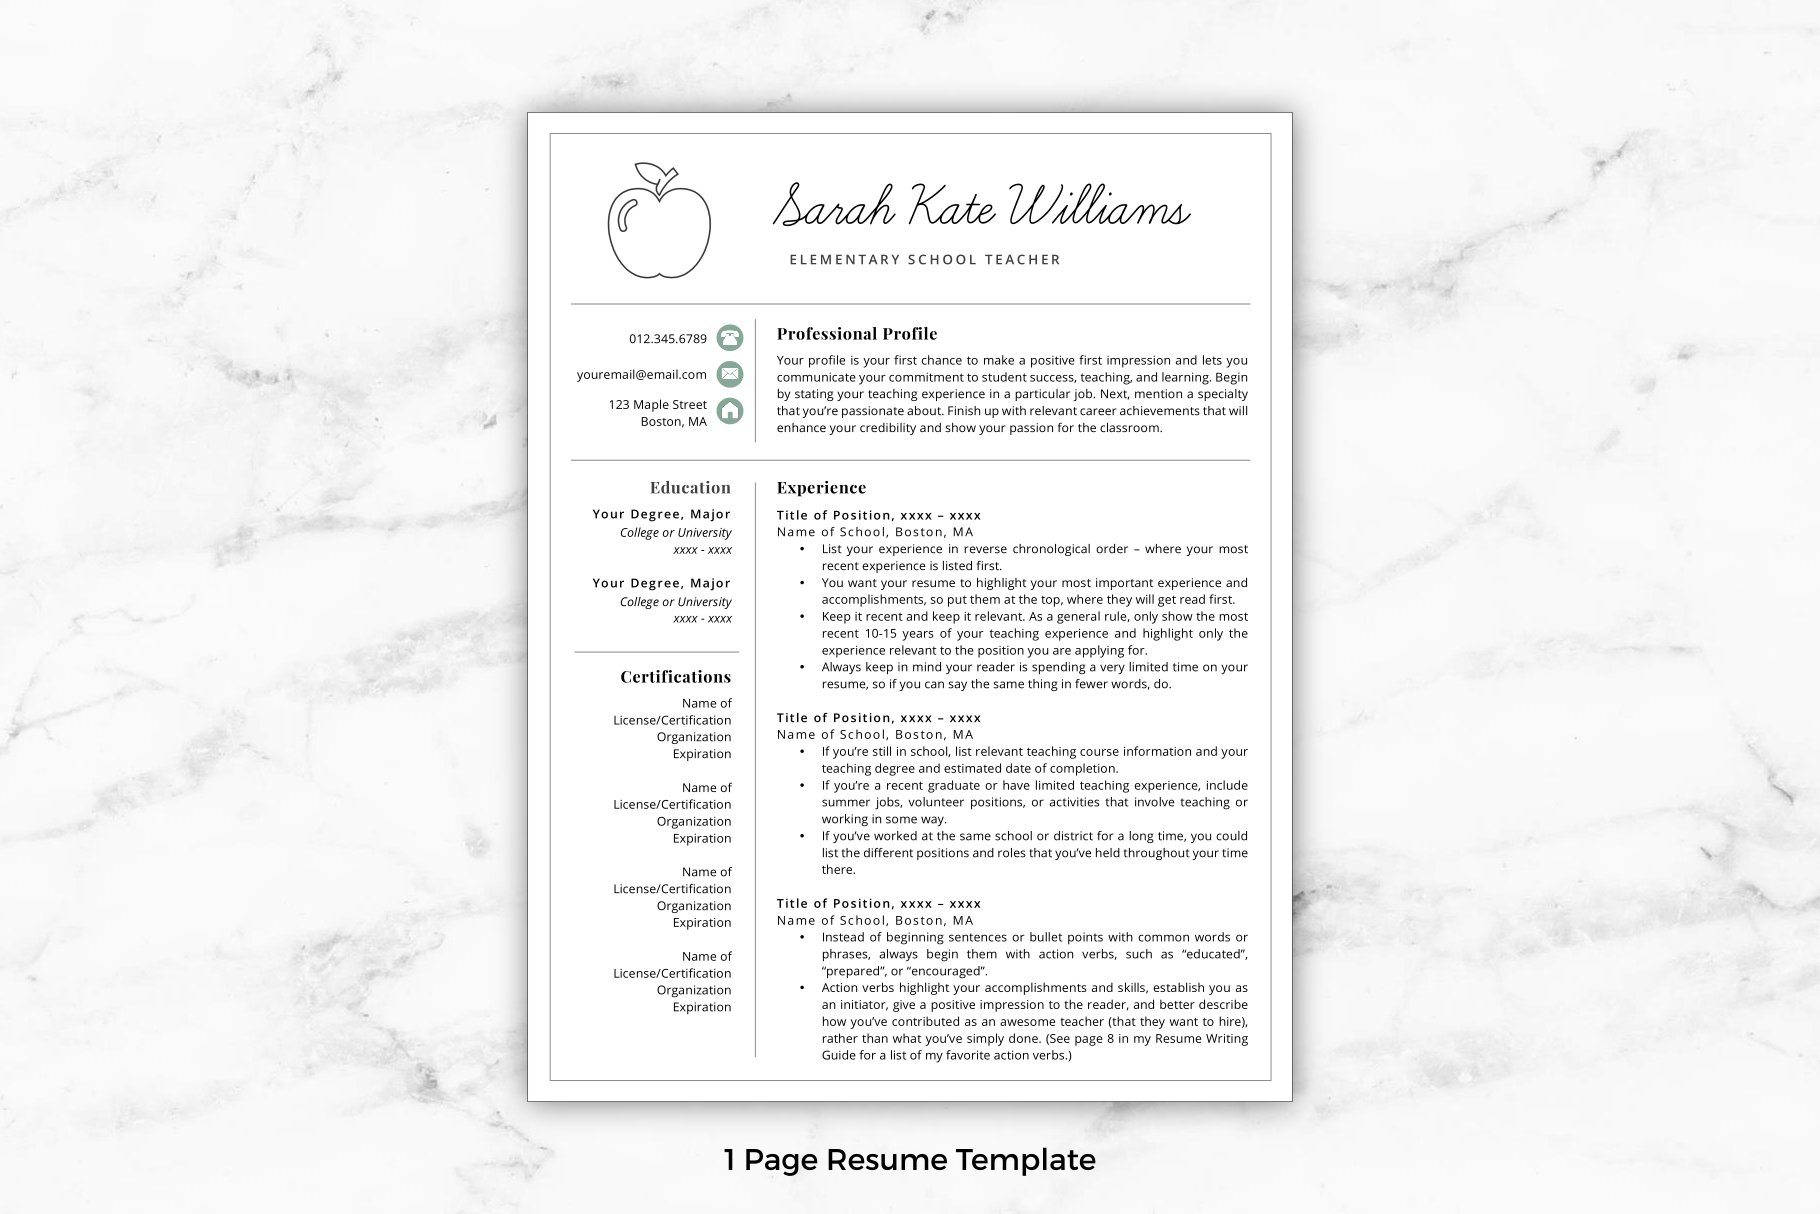 Teacher Resume/CV Template - Sarah preview image.